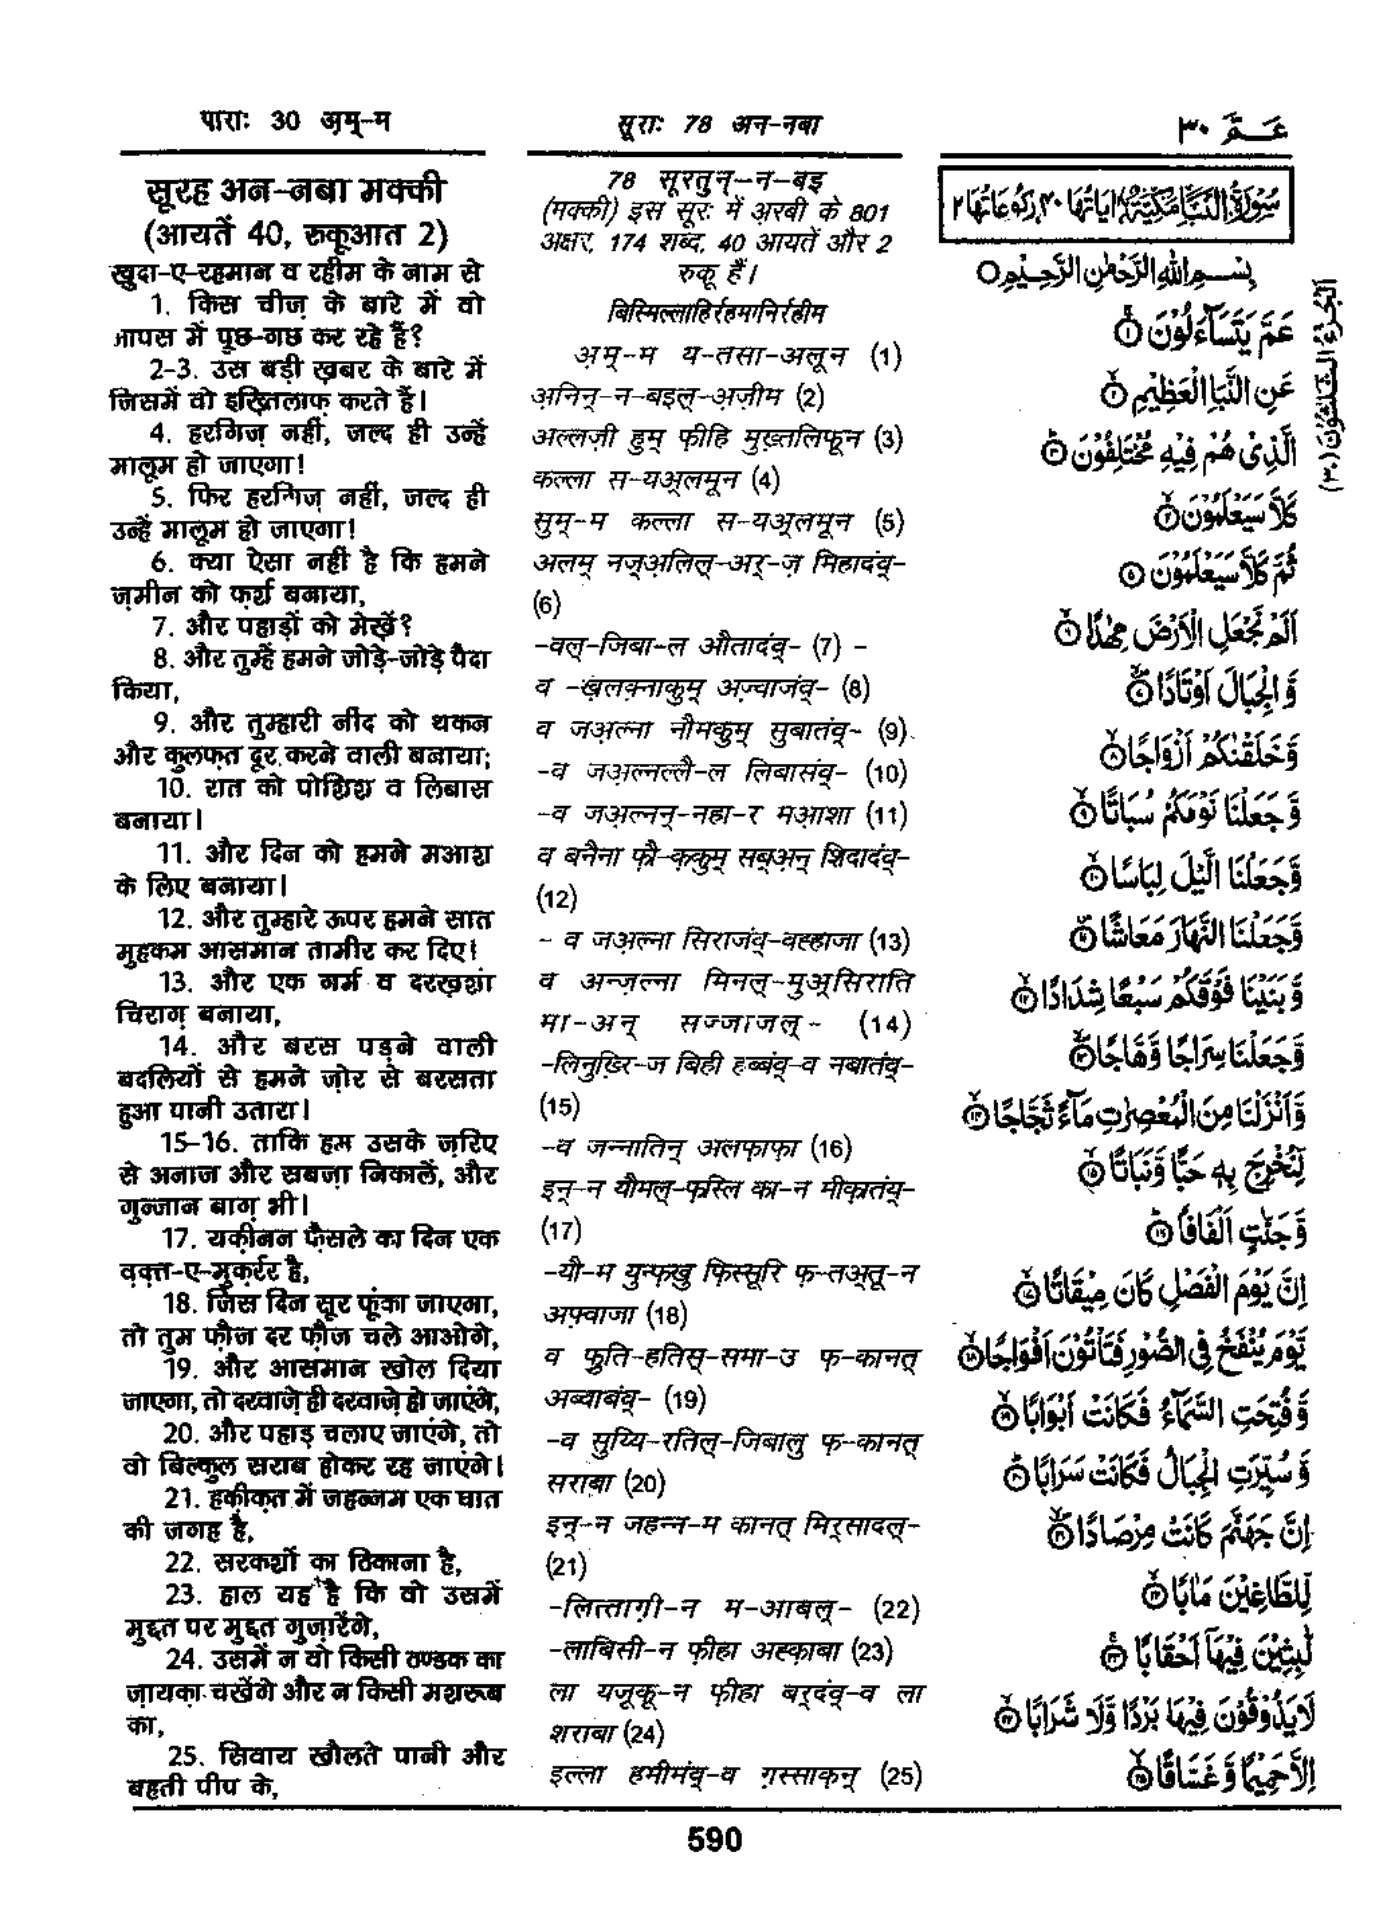 quran-arabic-hindi-translation-transliteration-pdf-2